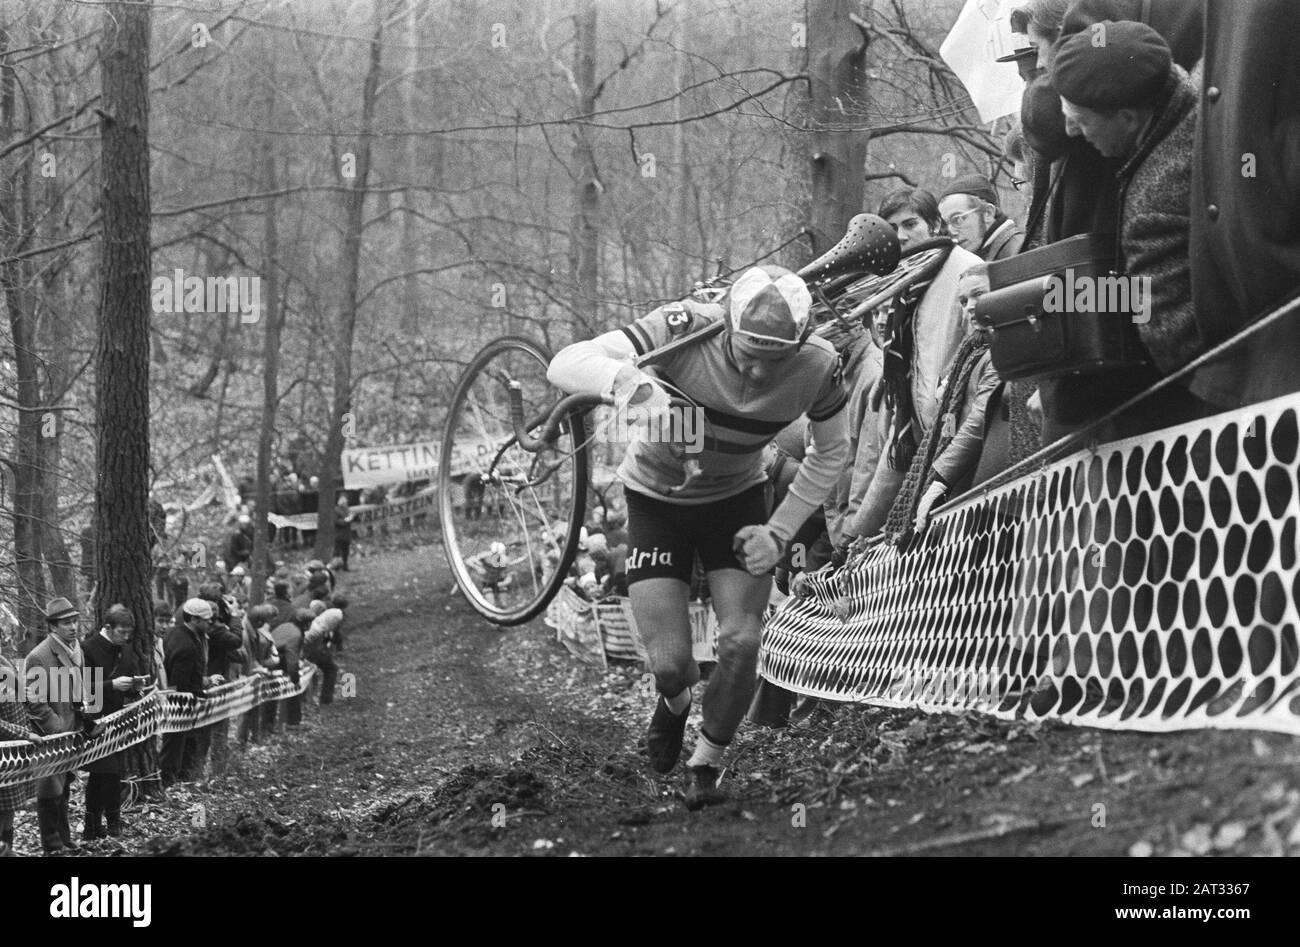 World Cycle Cycle Championships, Apeldoorn; Belgian Eric de Waeminck climbs berg (pros) Date: February 28, 1971 Location: Apeldoorn, Gelderland Keywords: VICE, cycling Stock Photo